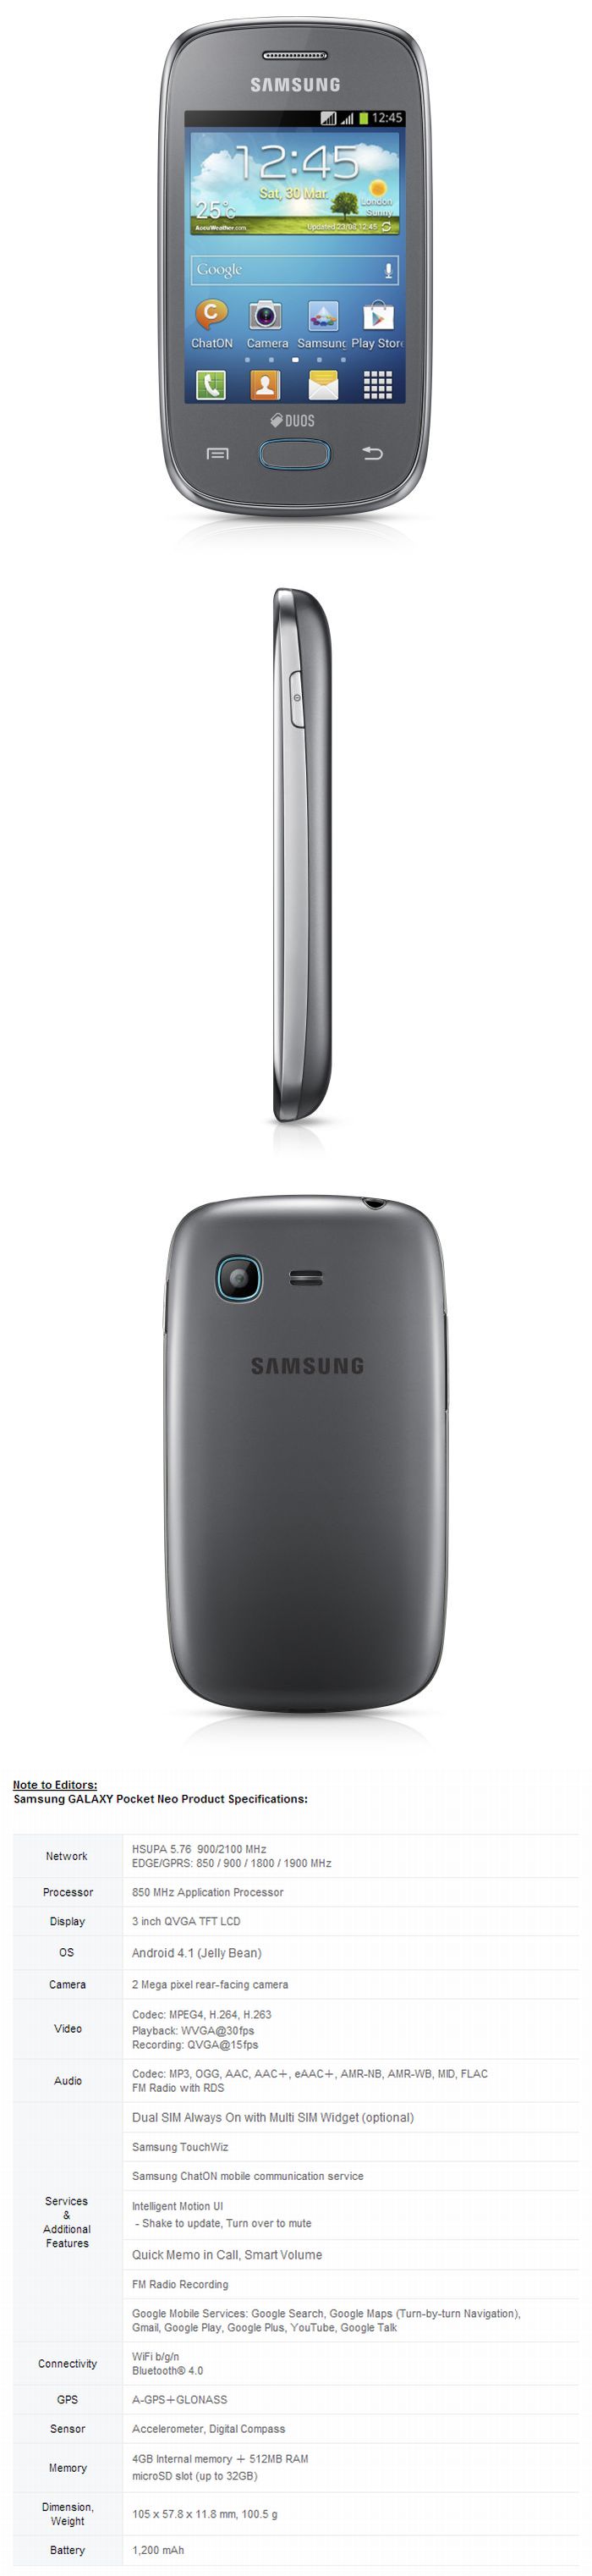 Filléres Samsung okostelefonok érkeznek